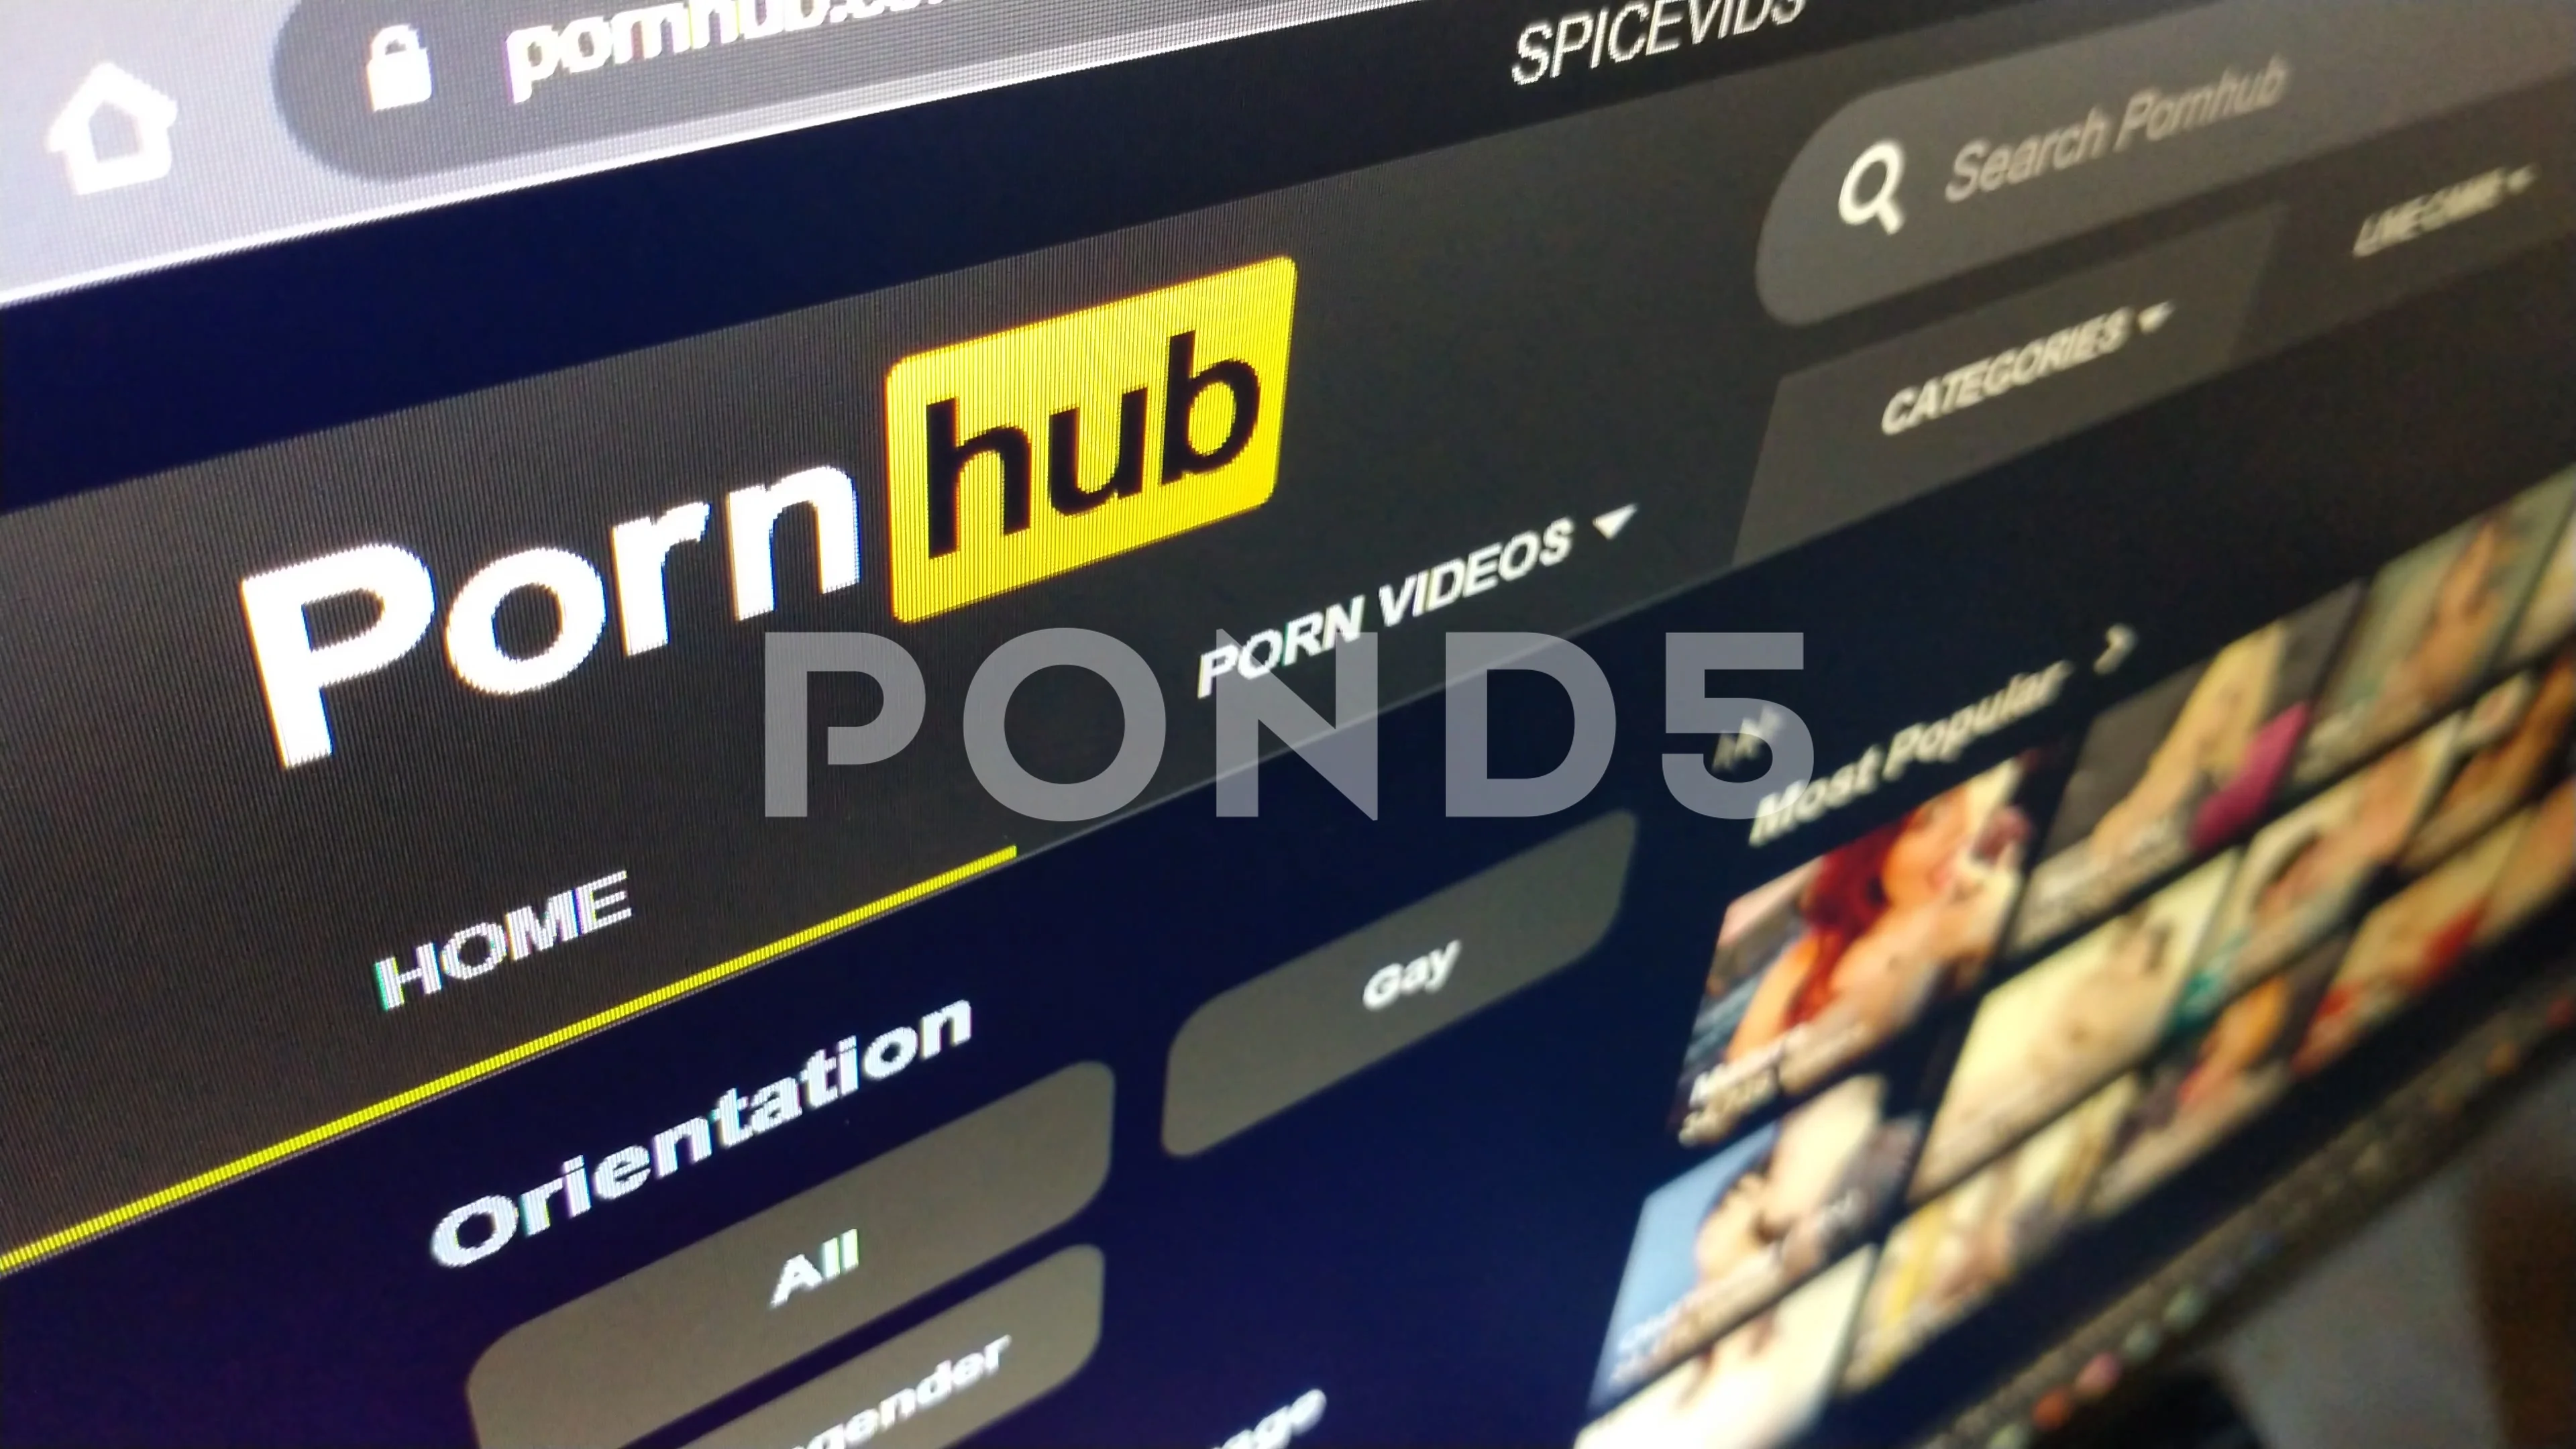 Oorn Vrfio - porn hub erotic video platform. pornhub ... | Stock Video | Pond5